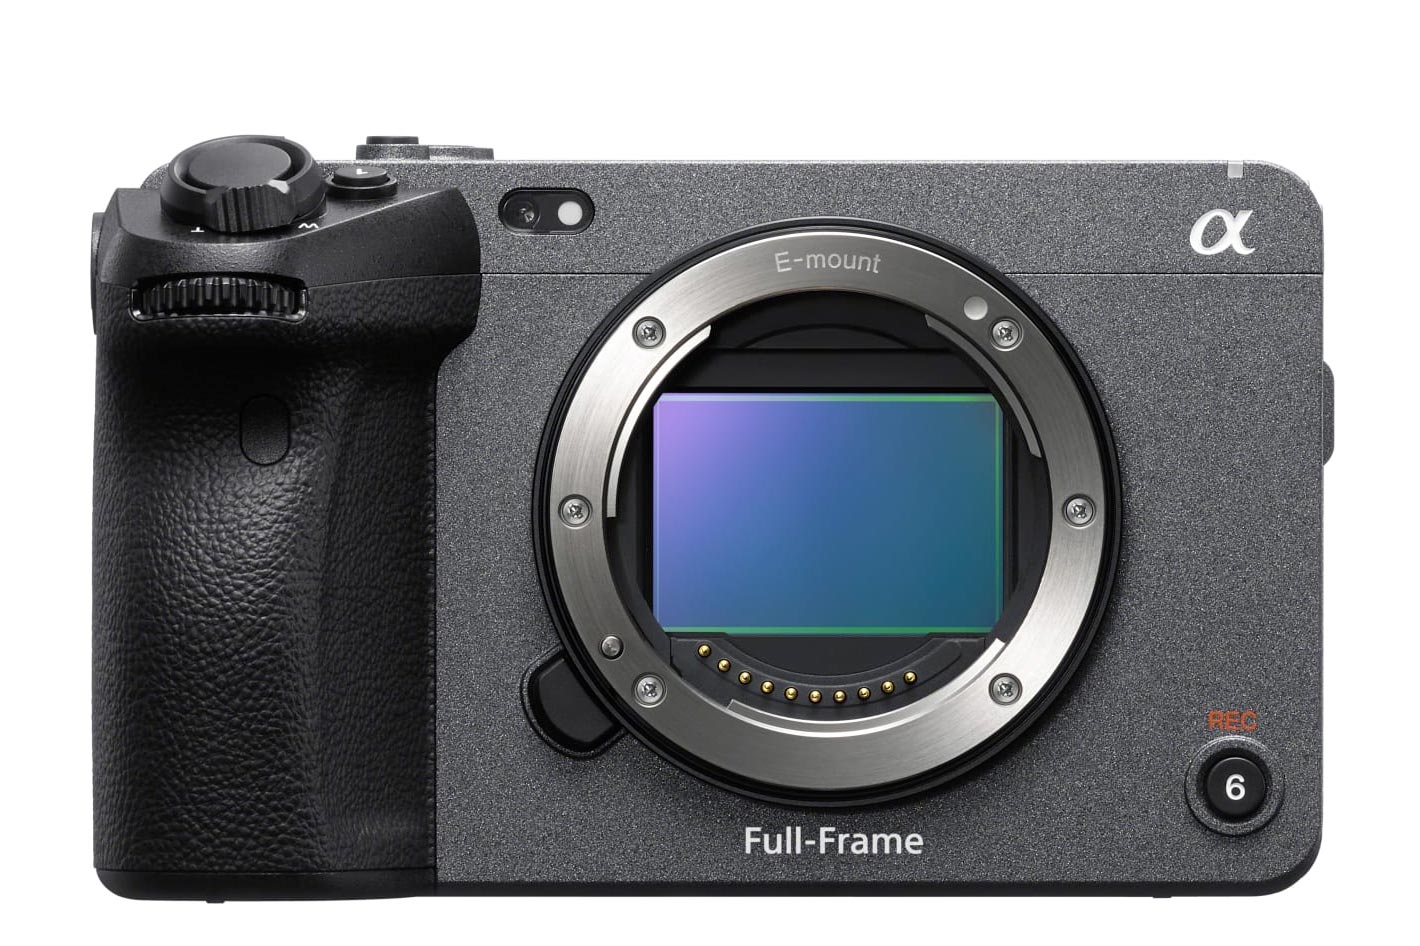 Sony FX3: a compact Cinema Line camera with S-Cinetone